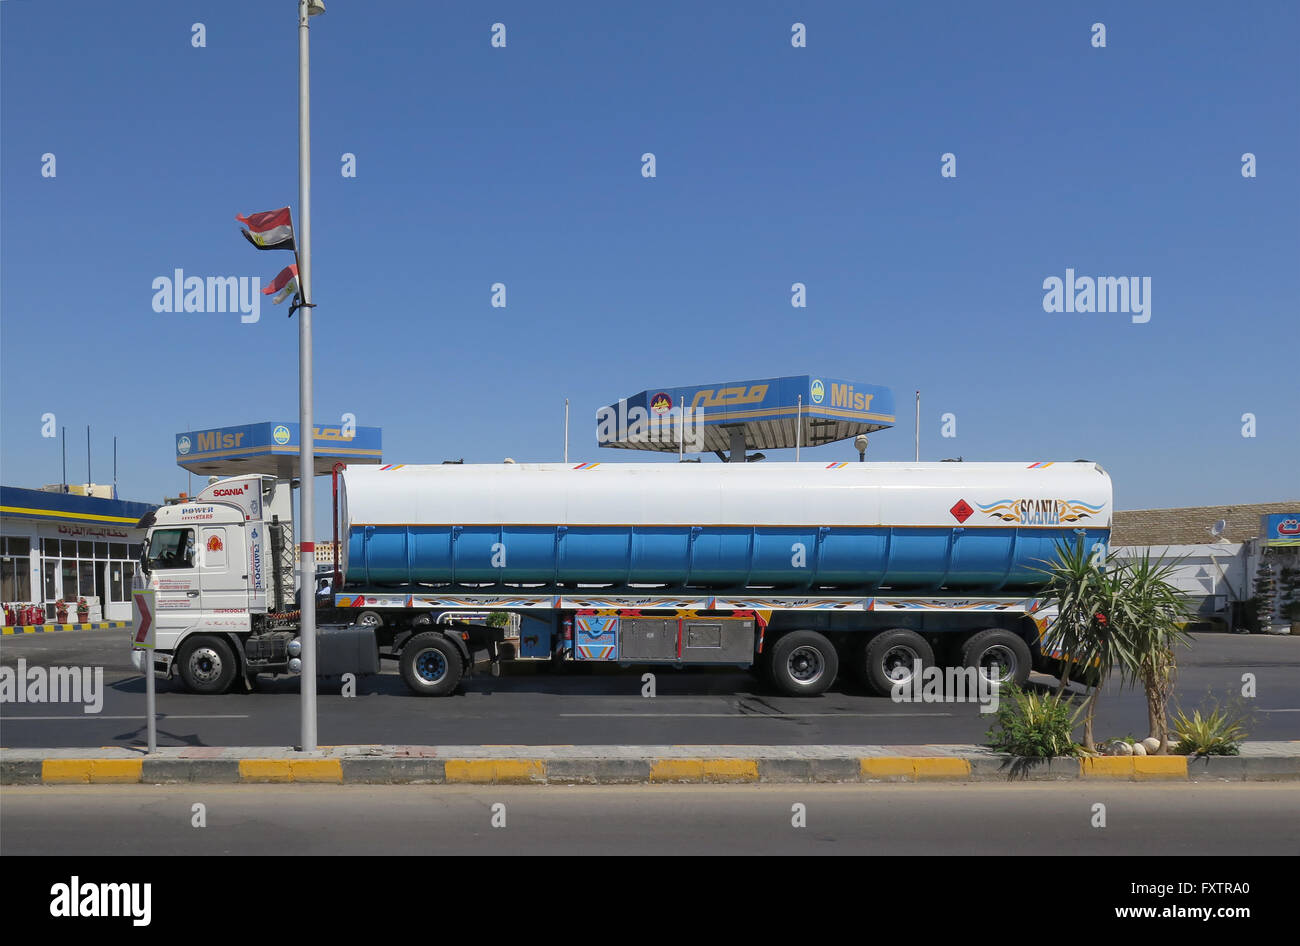 Misr, Tankstelle, Hurghada, Aegypten Stock Photo